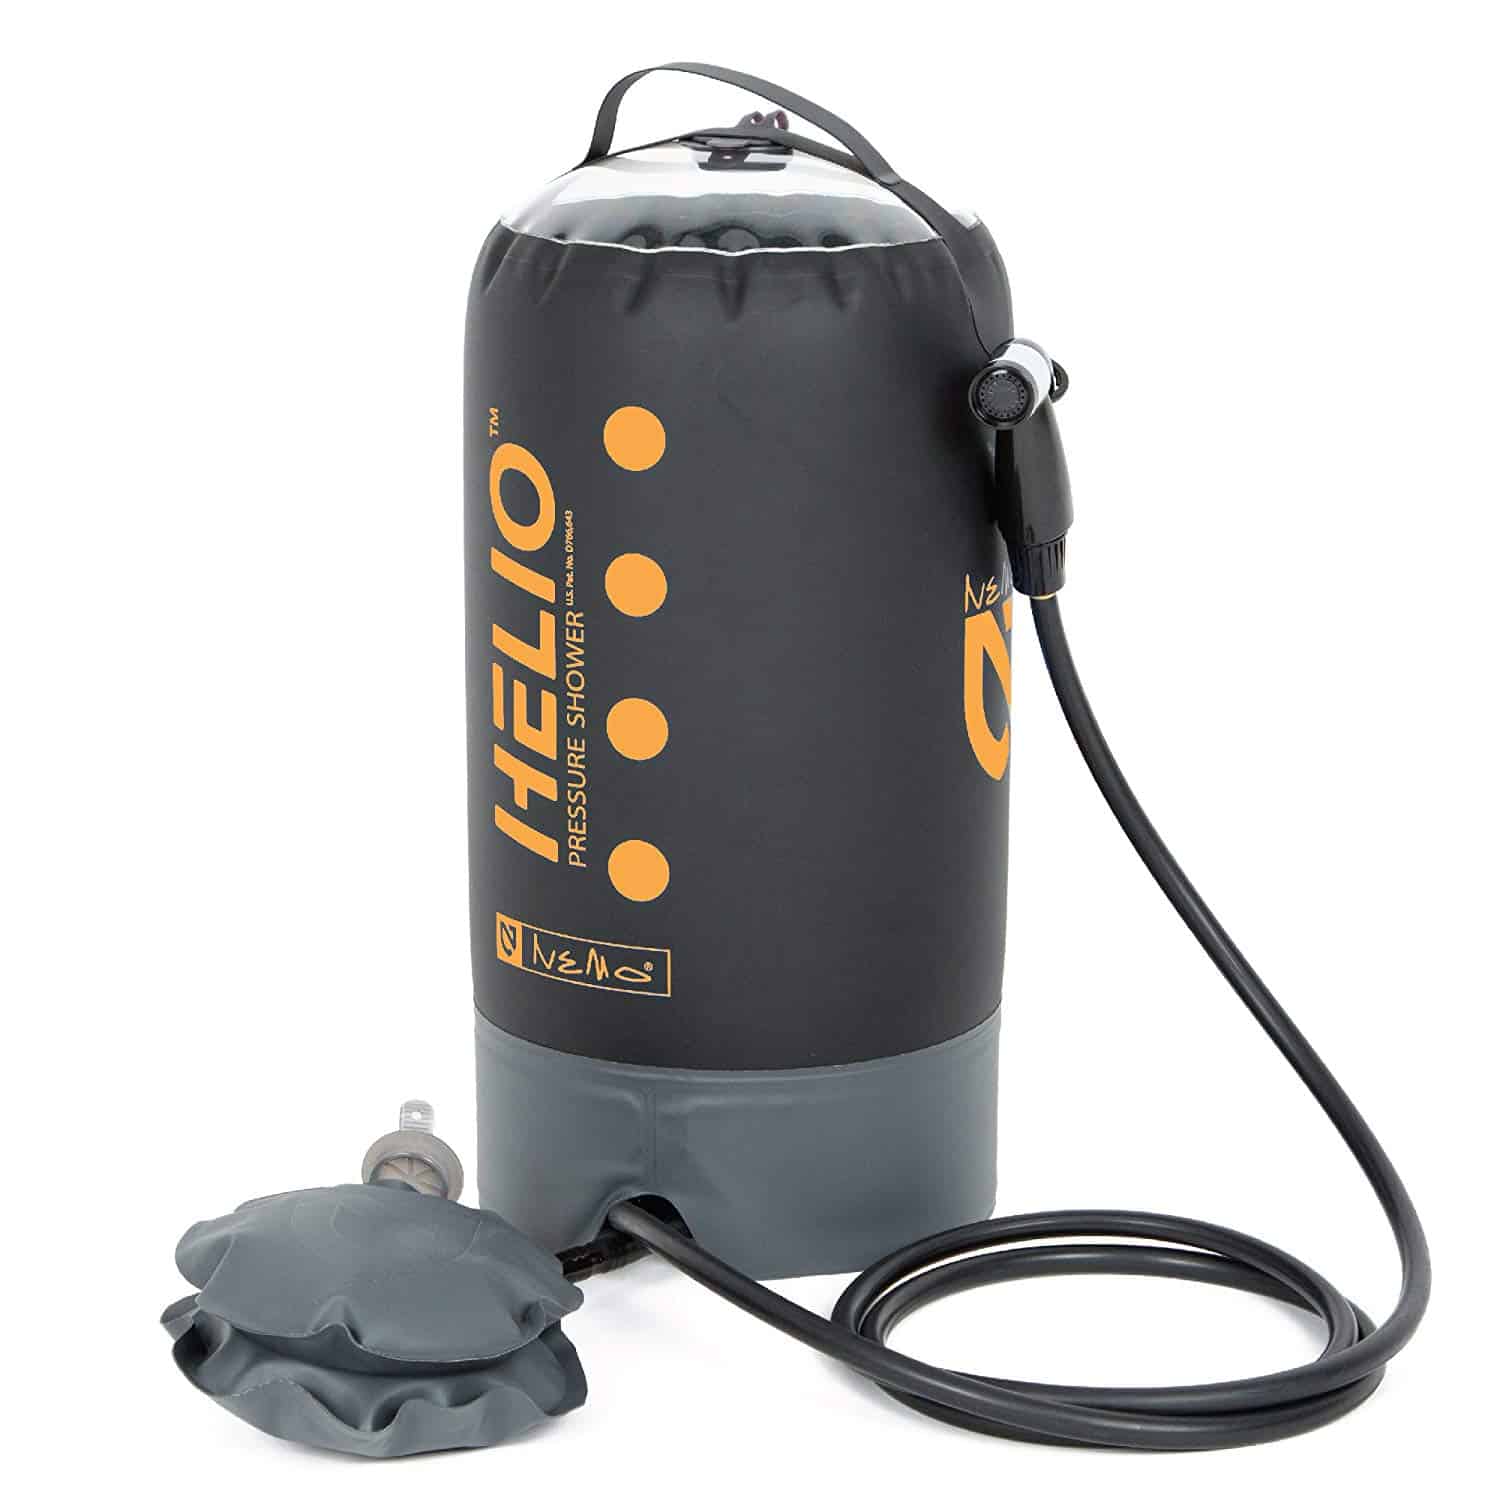 Nemo helio portable pressure shower with foot pump